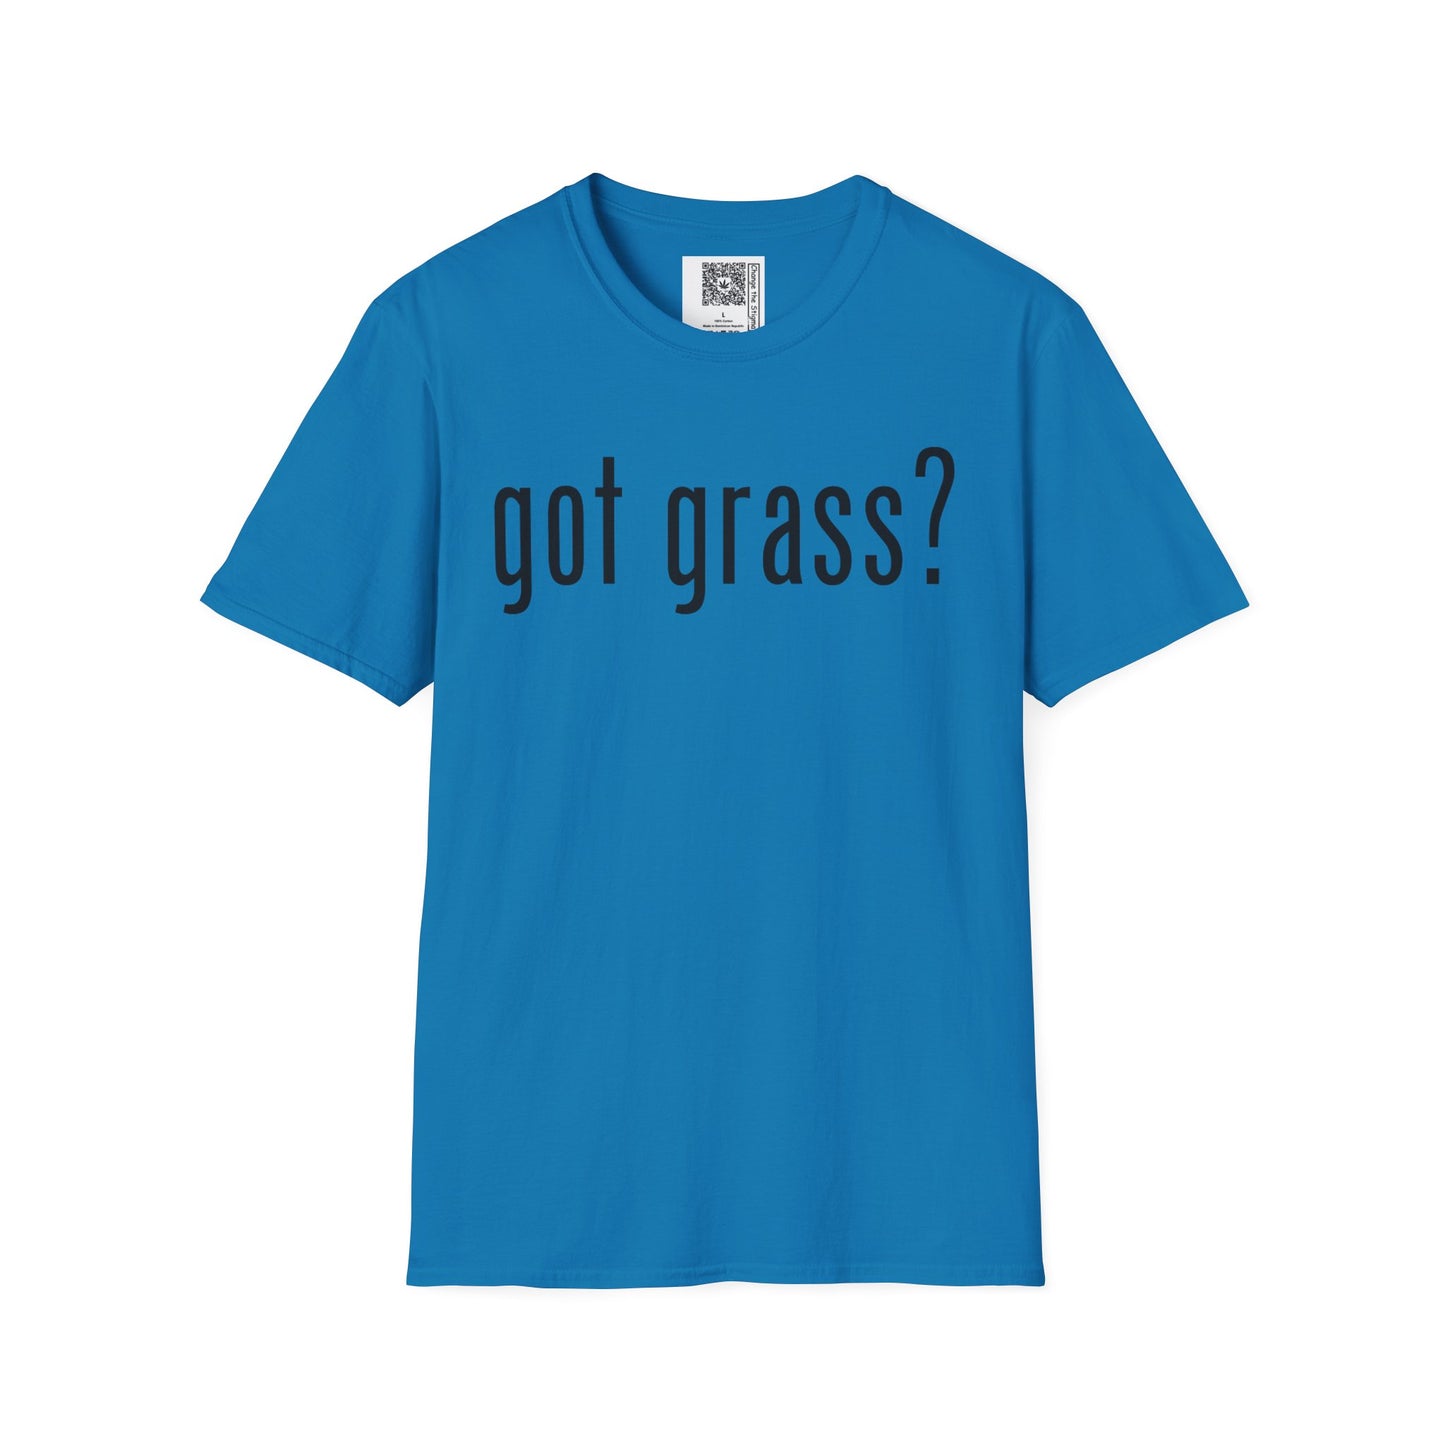 Change the Stigma GOT GRASS Weed Shirt